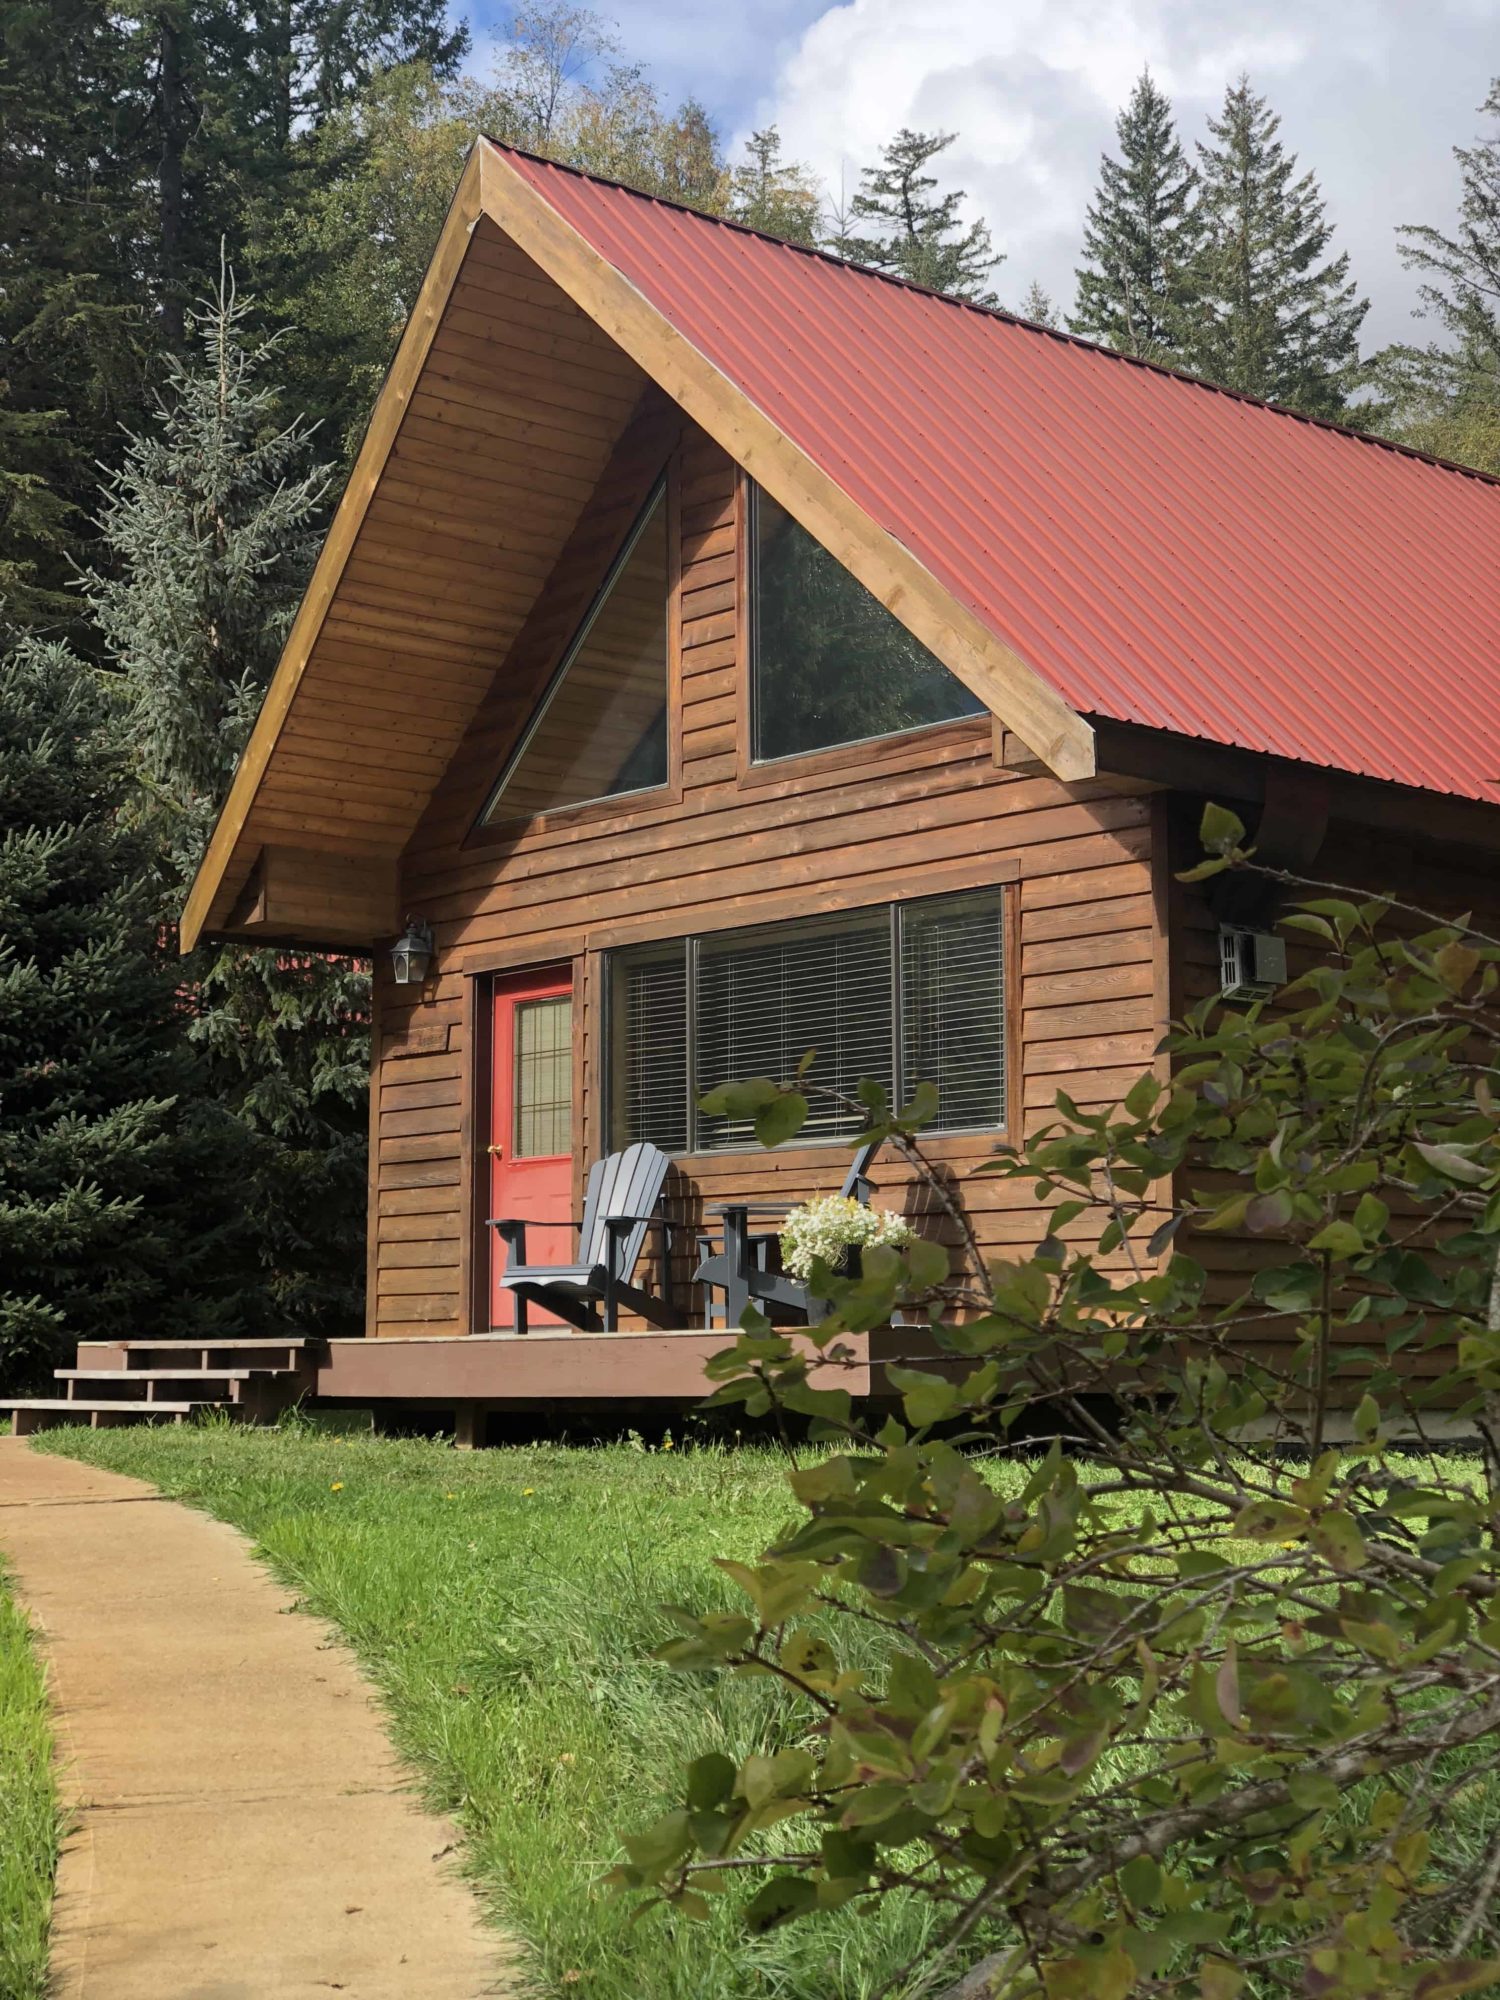 Tweedsmuir Lodge: Haus mit rotem Dach